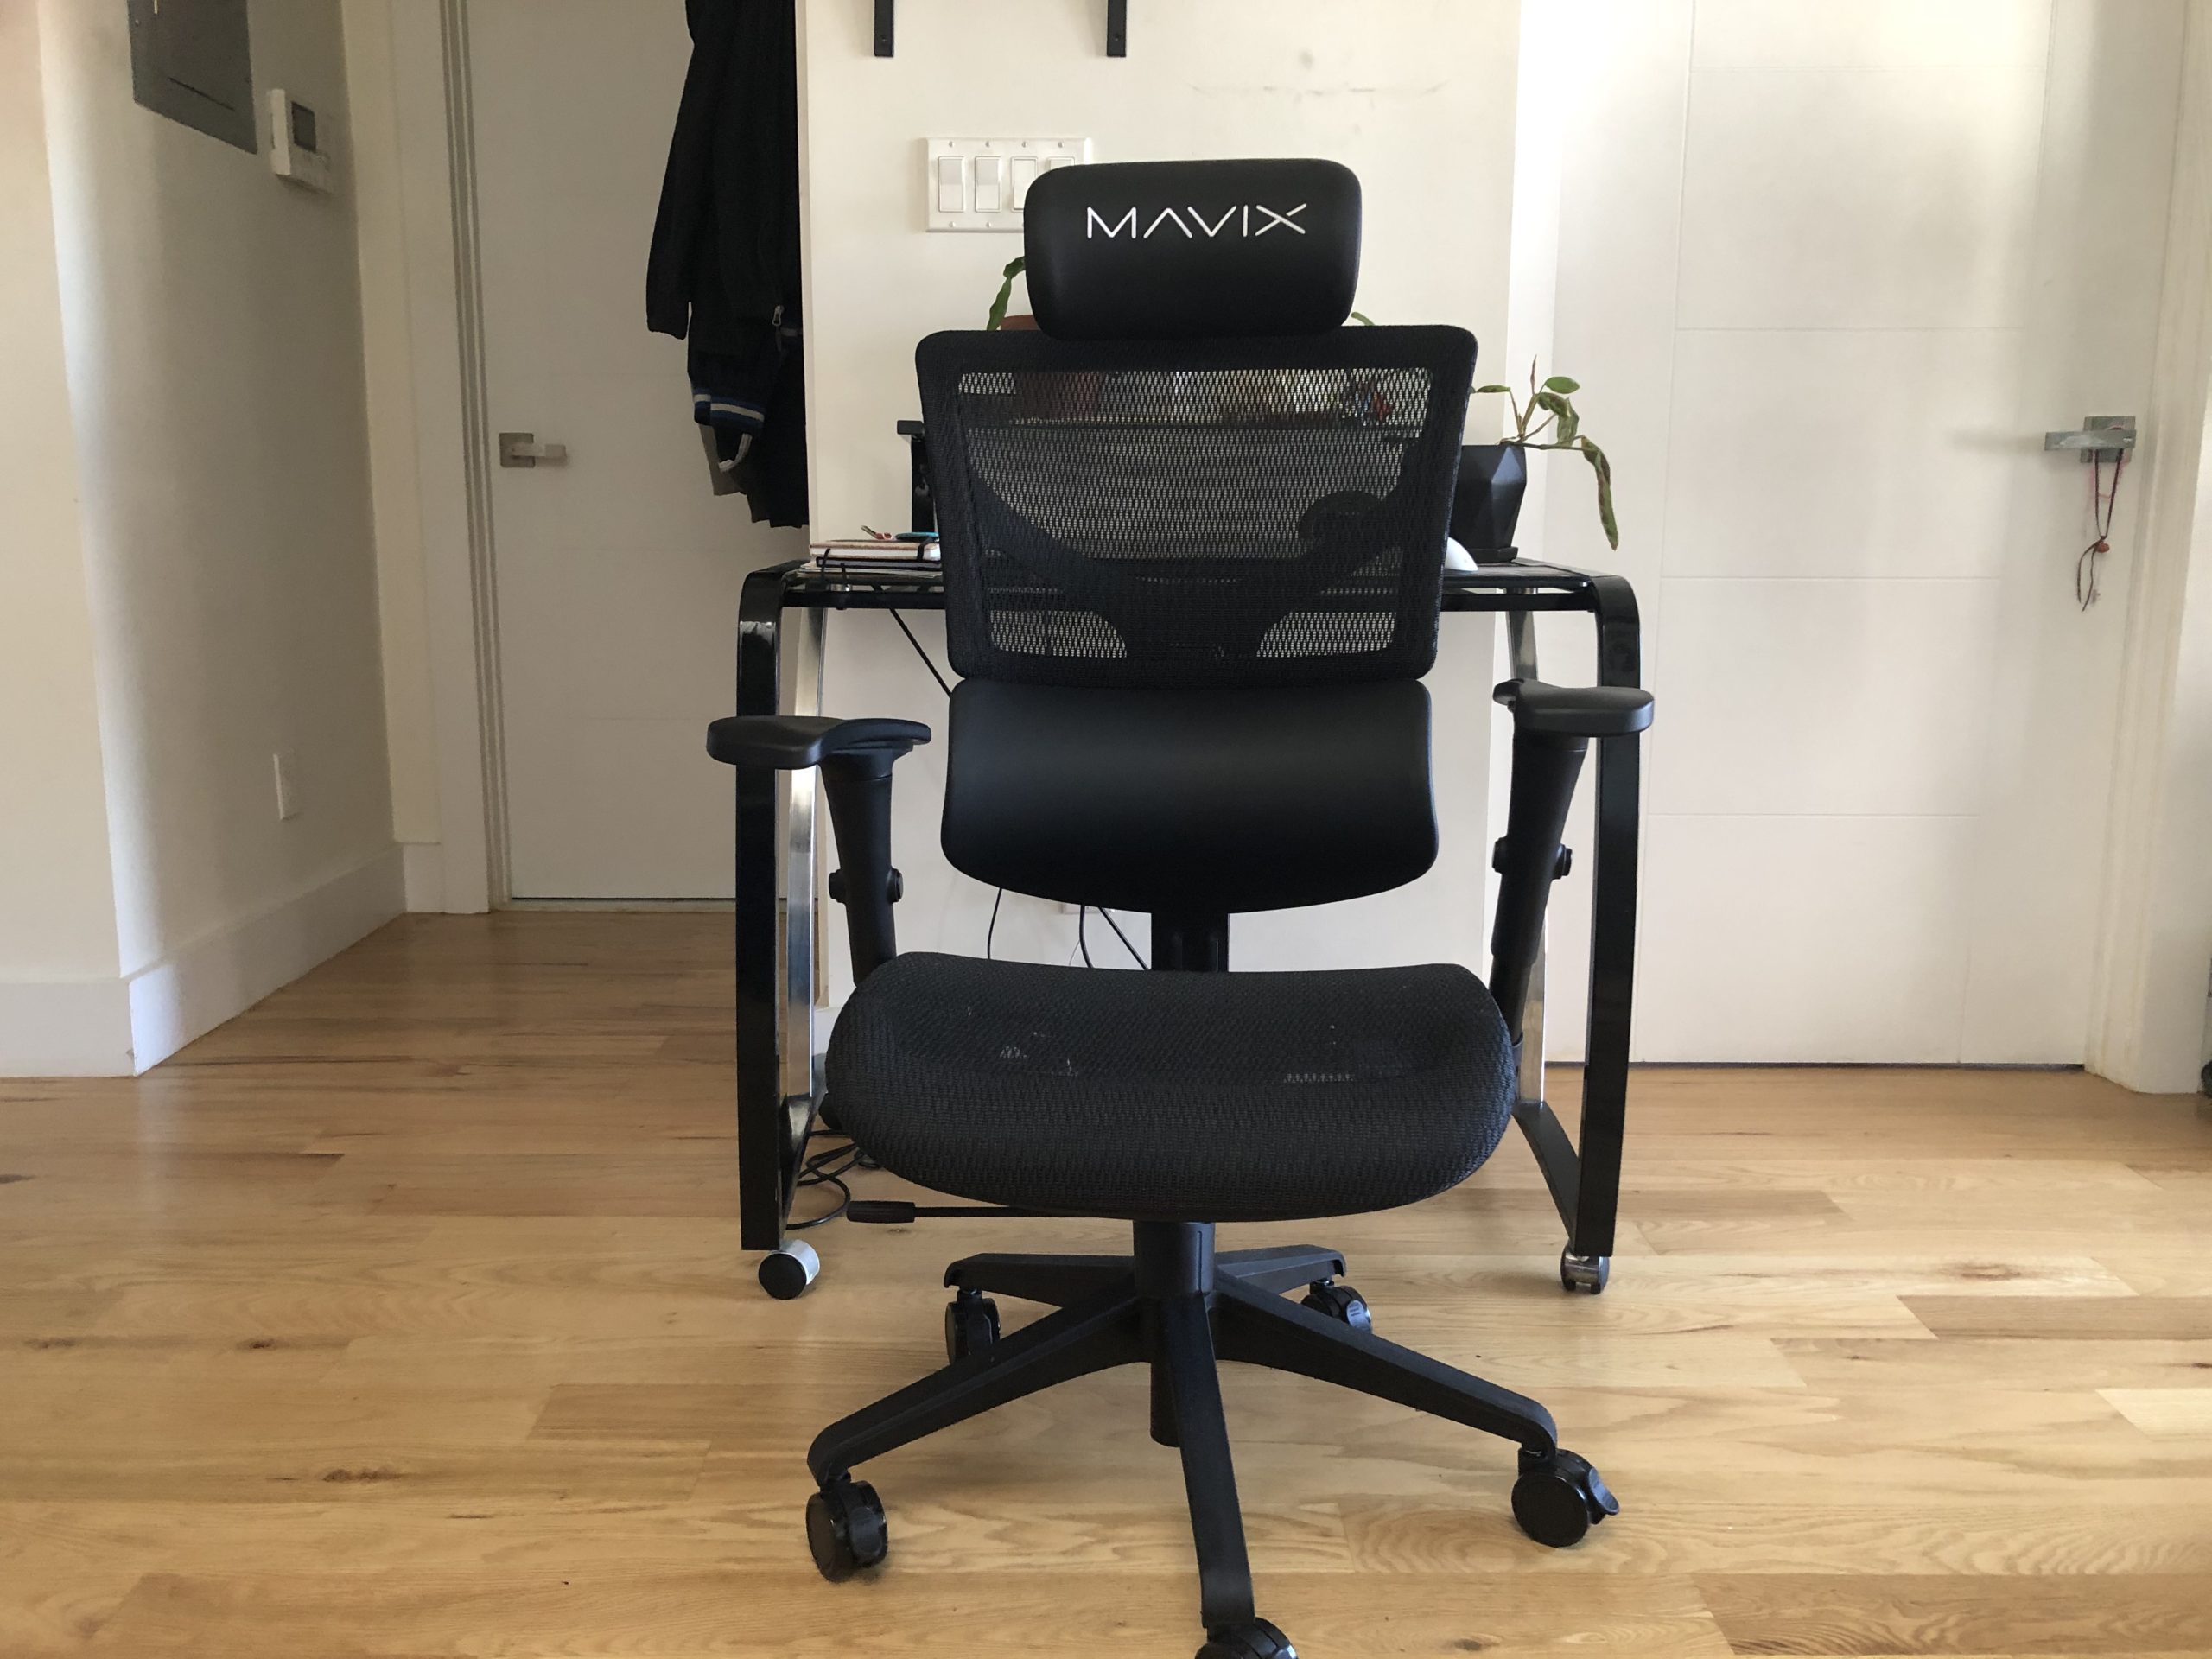 mavix-m5-gaming-chair-review:-polish-over-posture